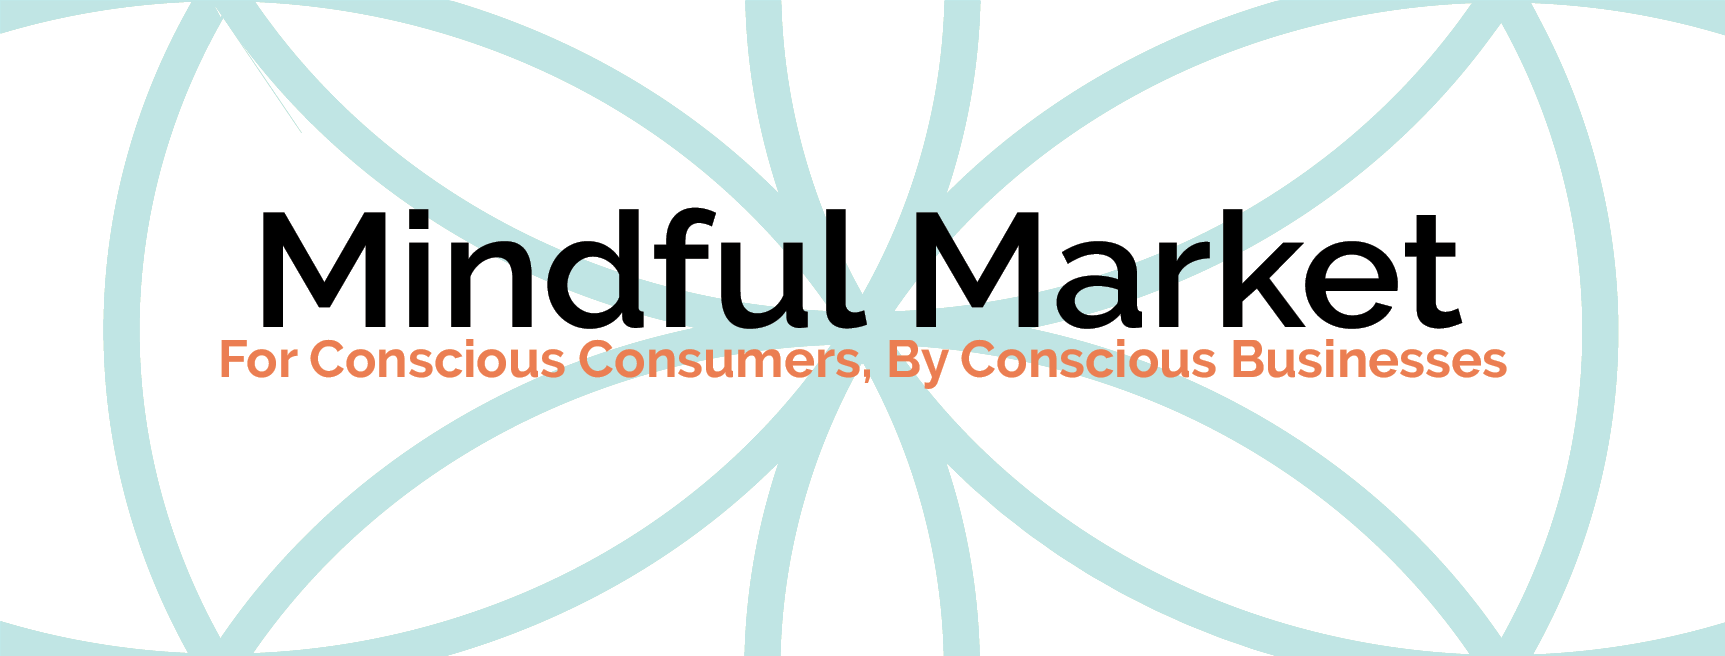 Mindful Market cover